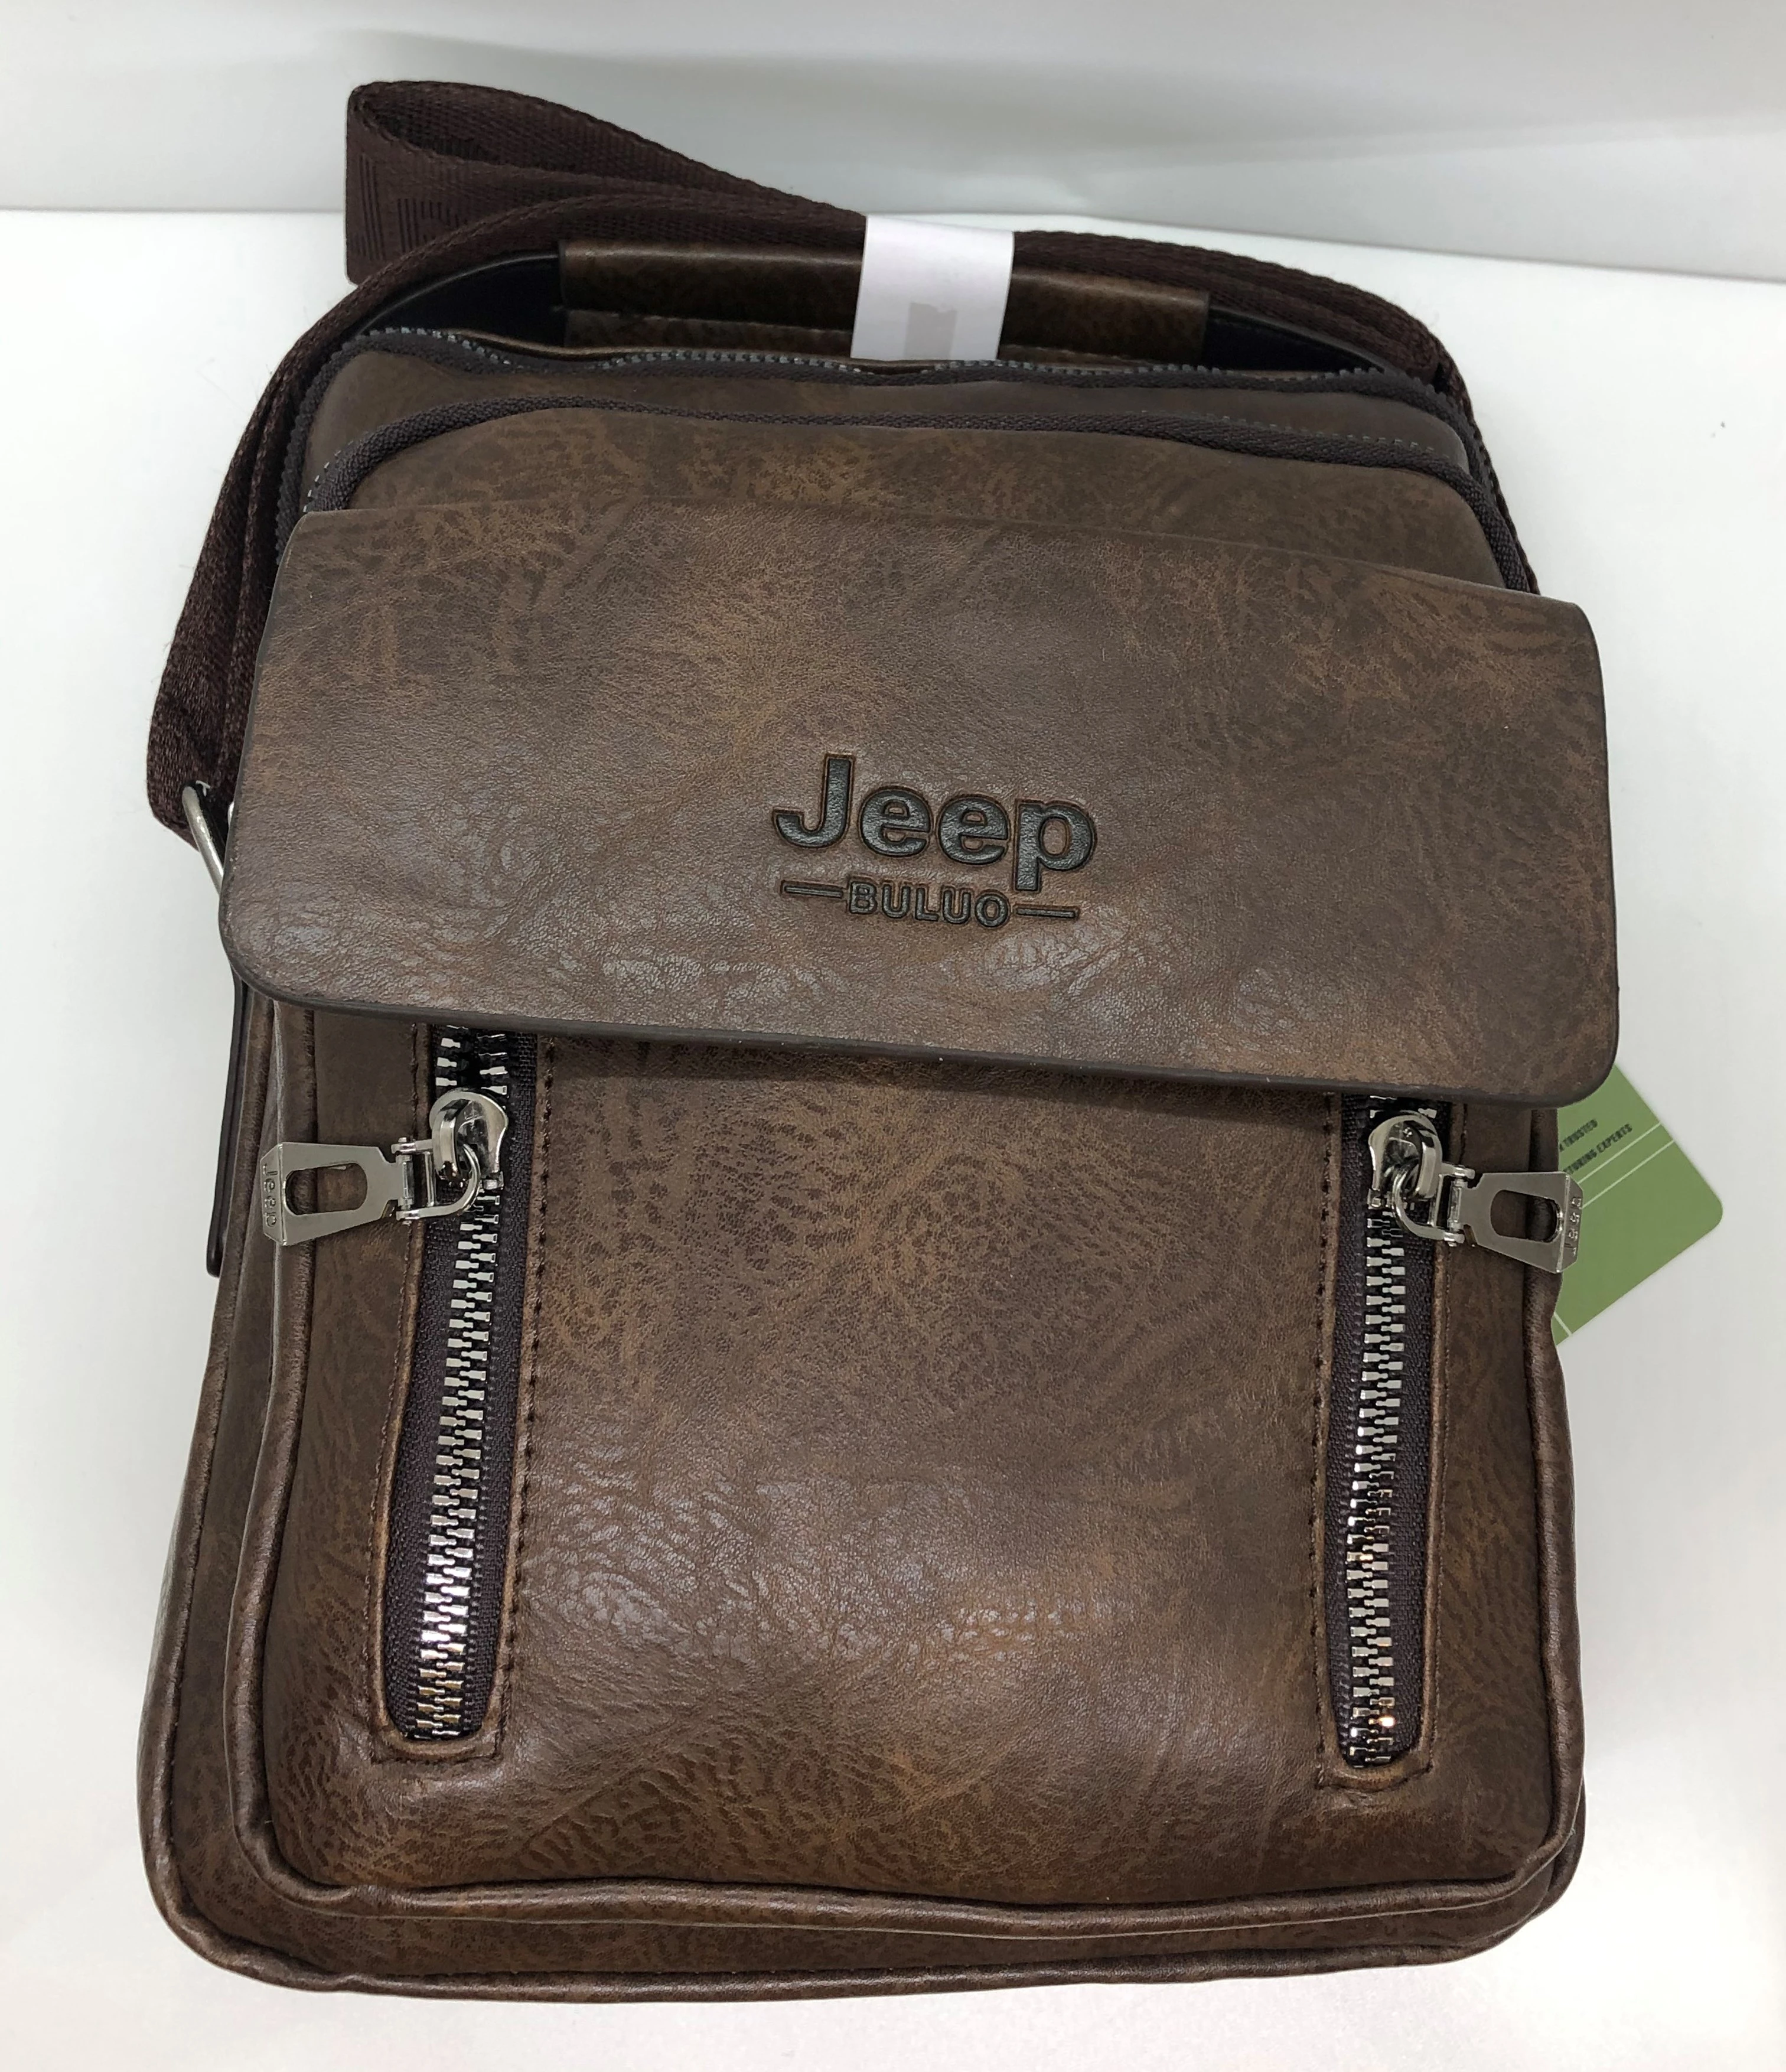 Leather Jeep Cross shoulder handbag in dark brown color